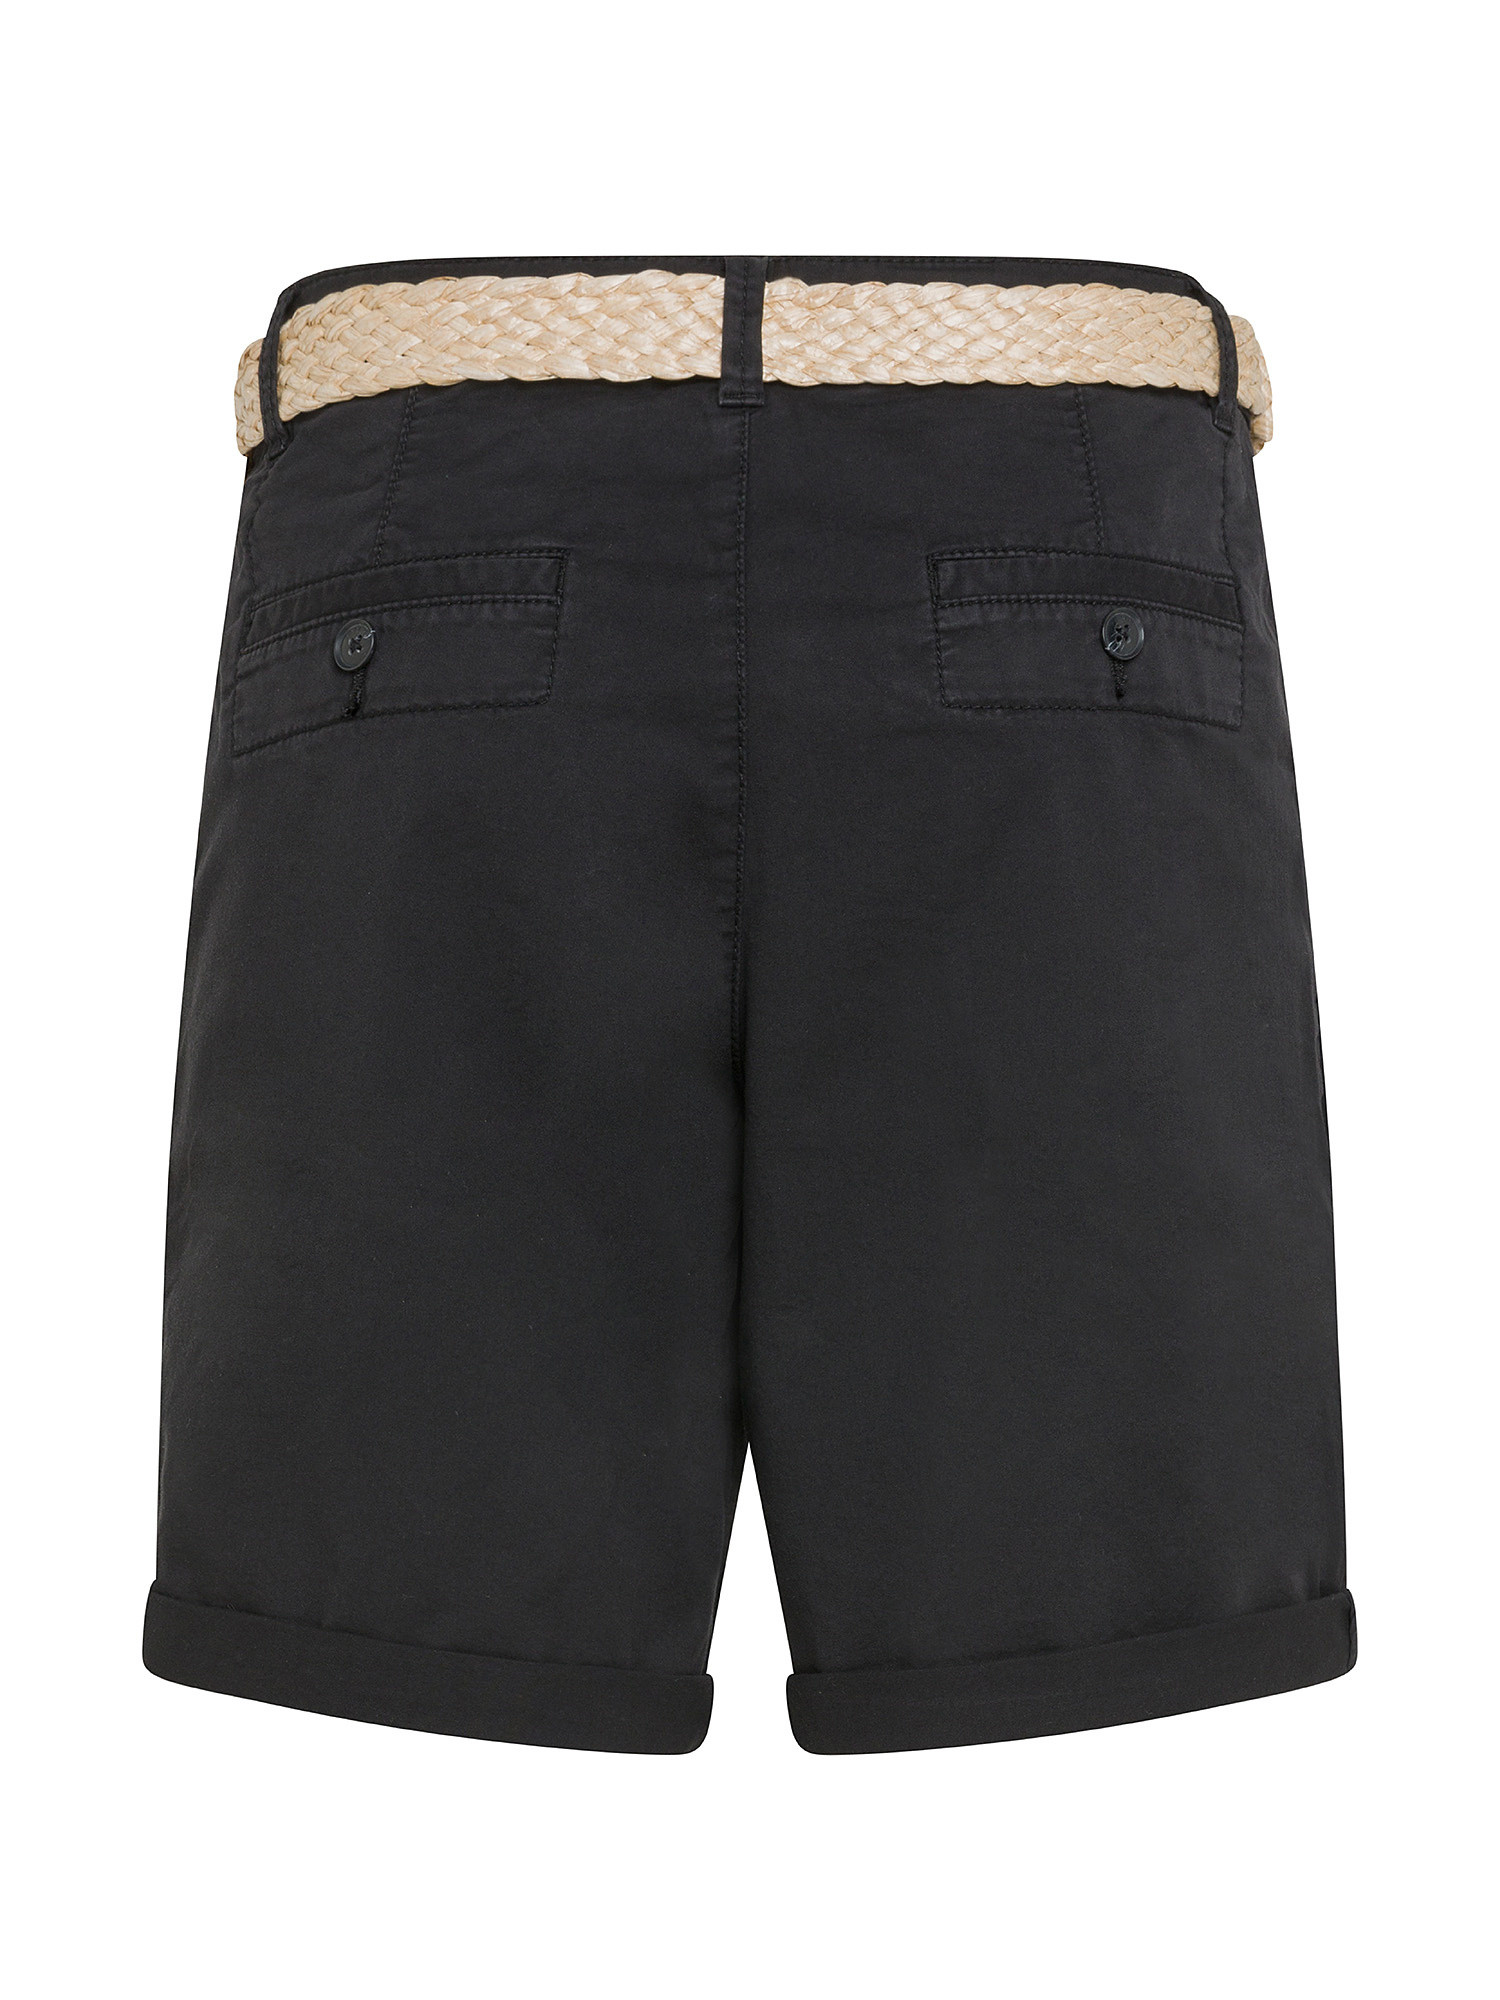 Esprit - Shorts con cintura intrecciata in rafia, Nero, large image number 1